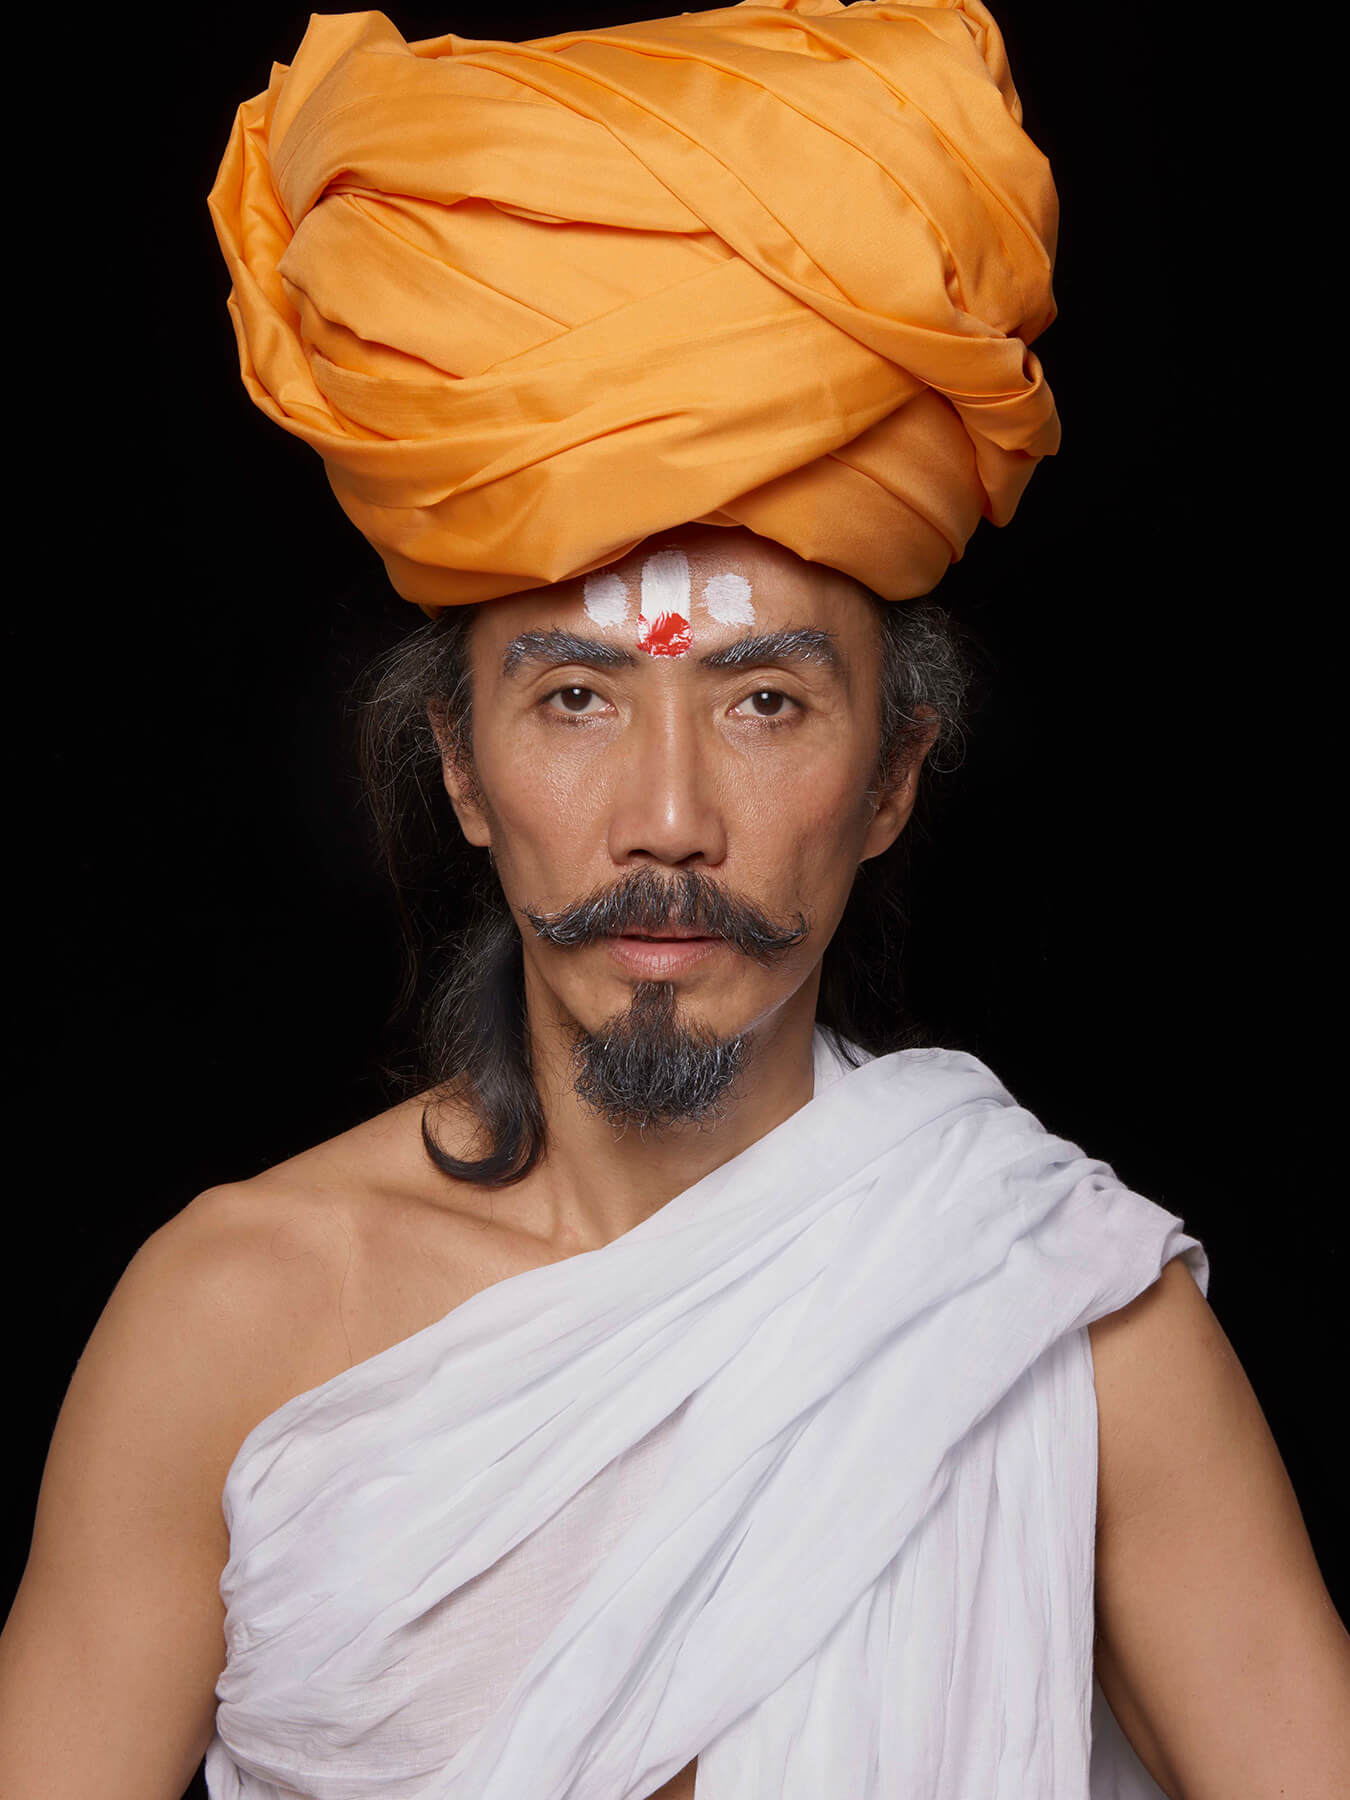 14 Jan 2018 Derong is styled as a stereotypical "indian spiritual guru"